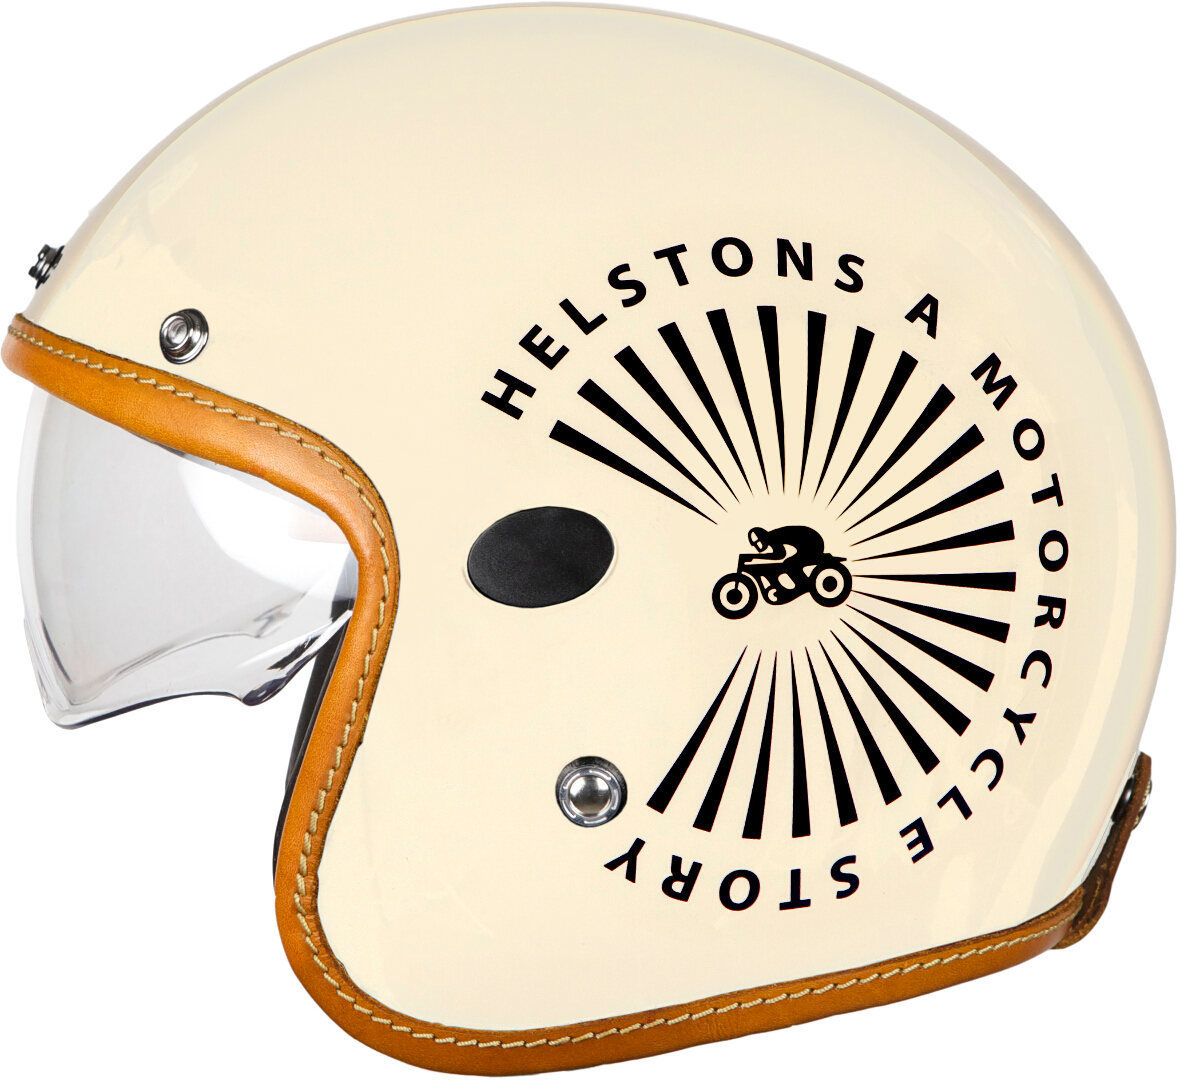 Helstons Sun Carbon Jet Helmet, beige, Size 2XL, beige, Size 2XL